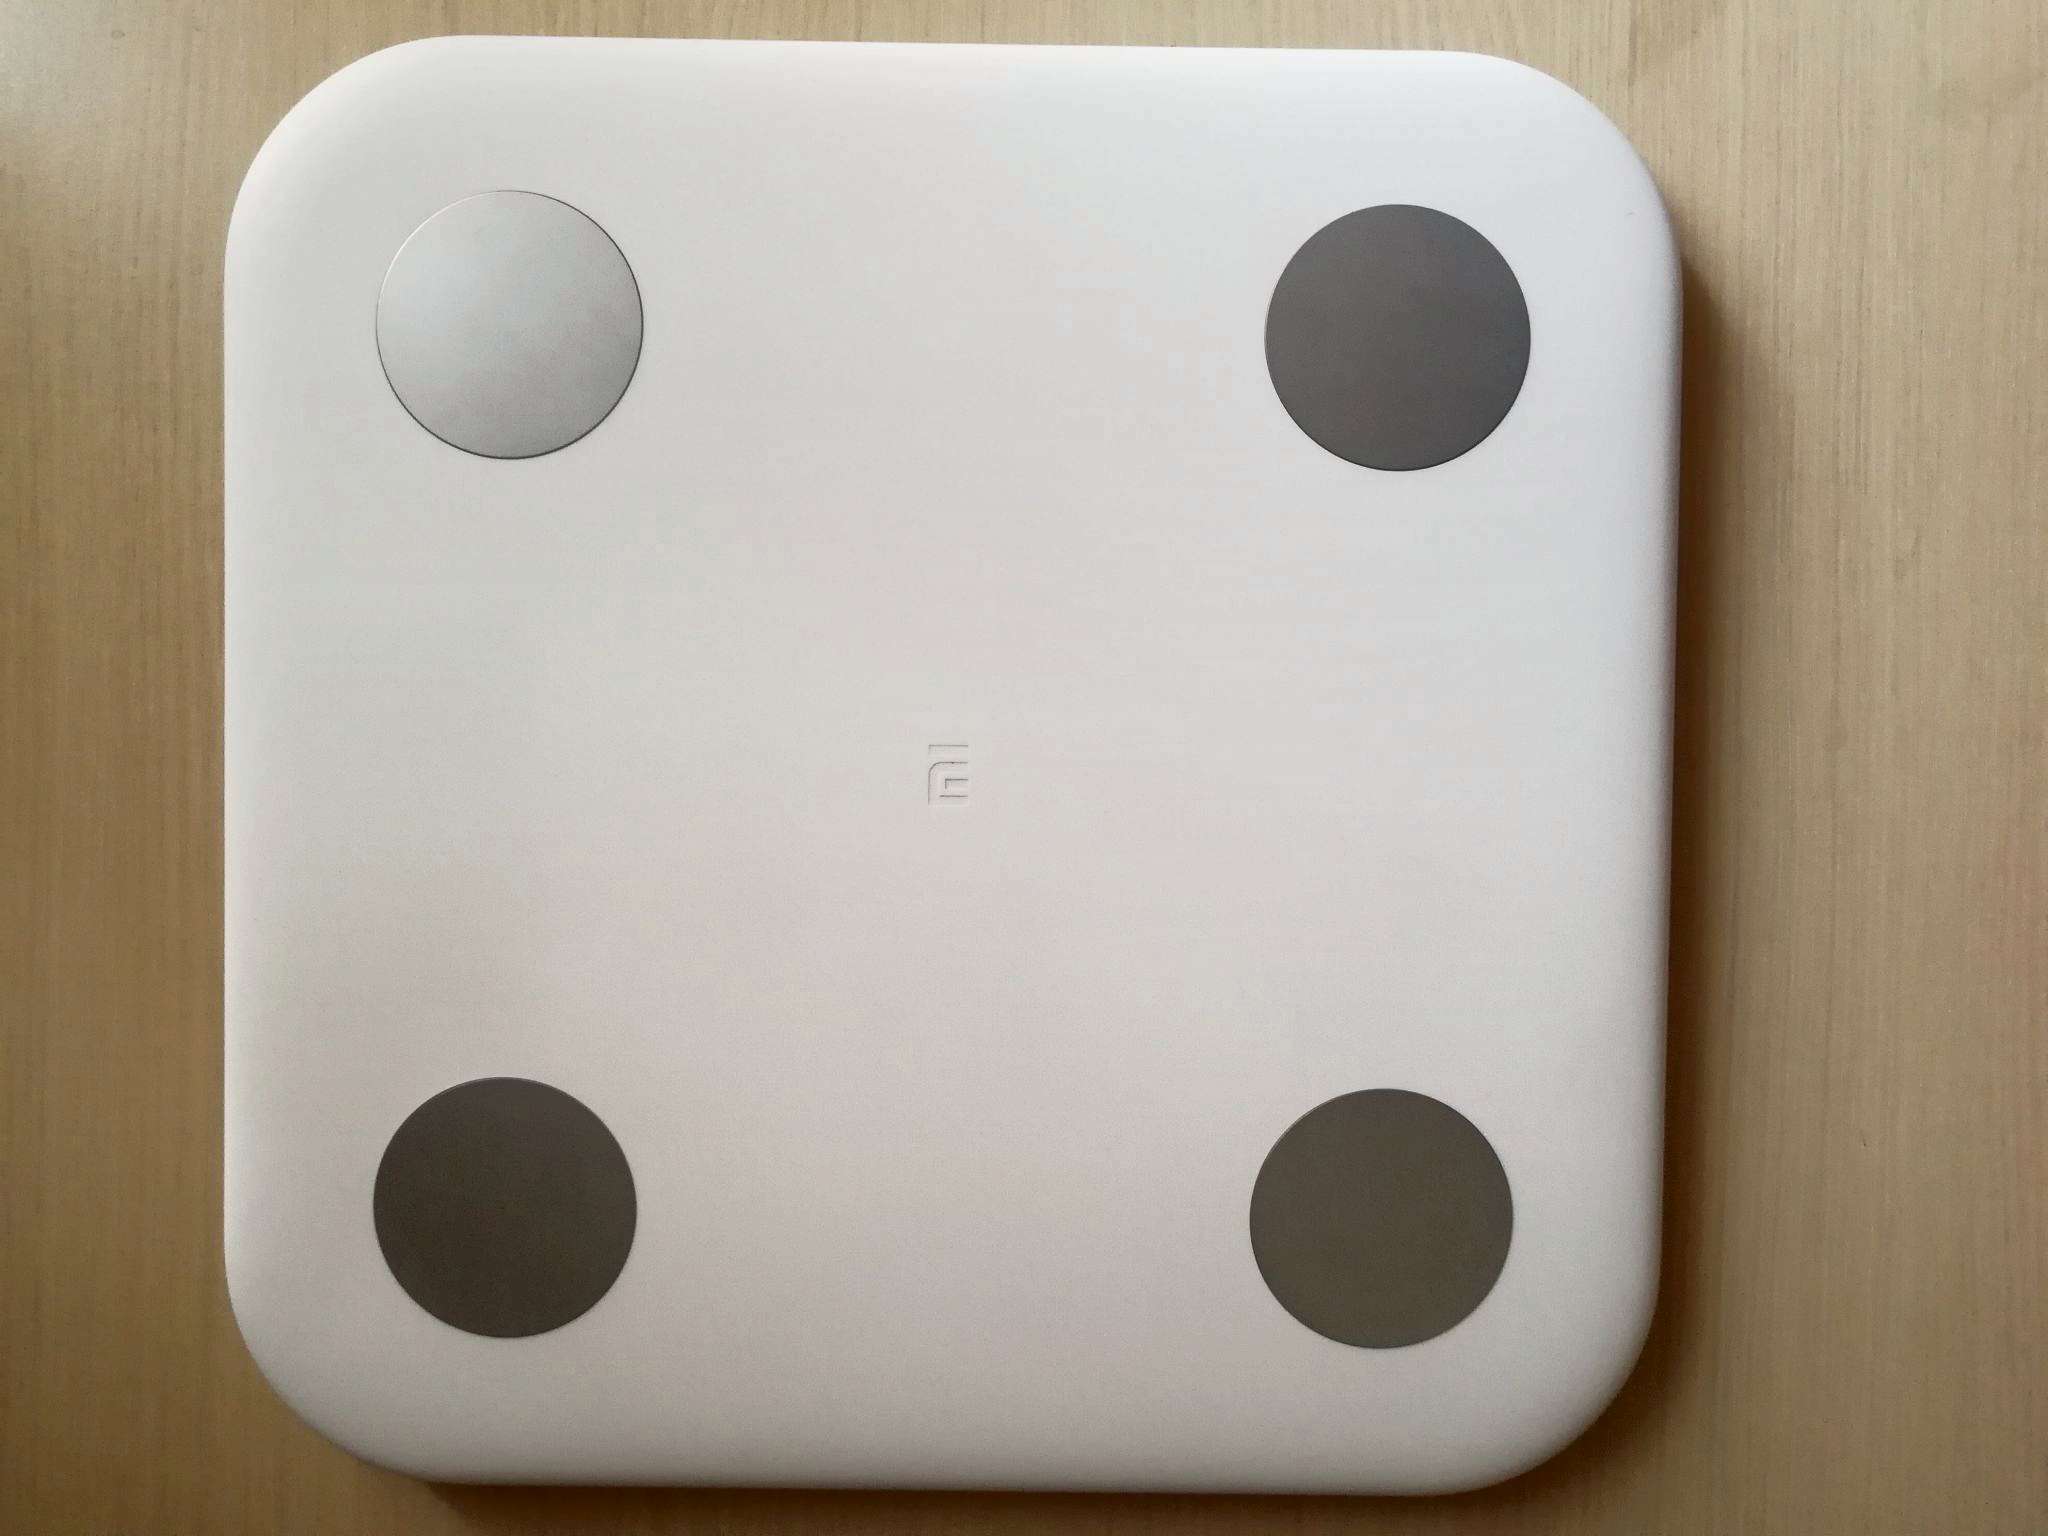 Весы Xiaomi Smart Scale Обзор